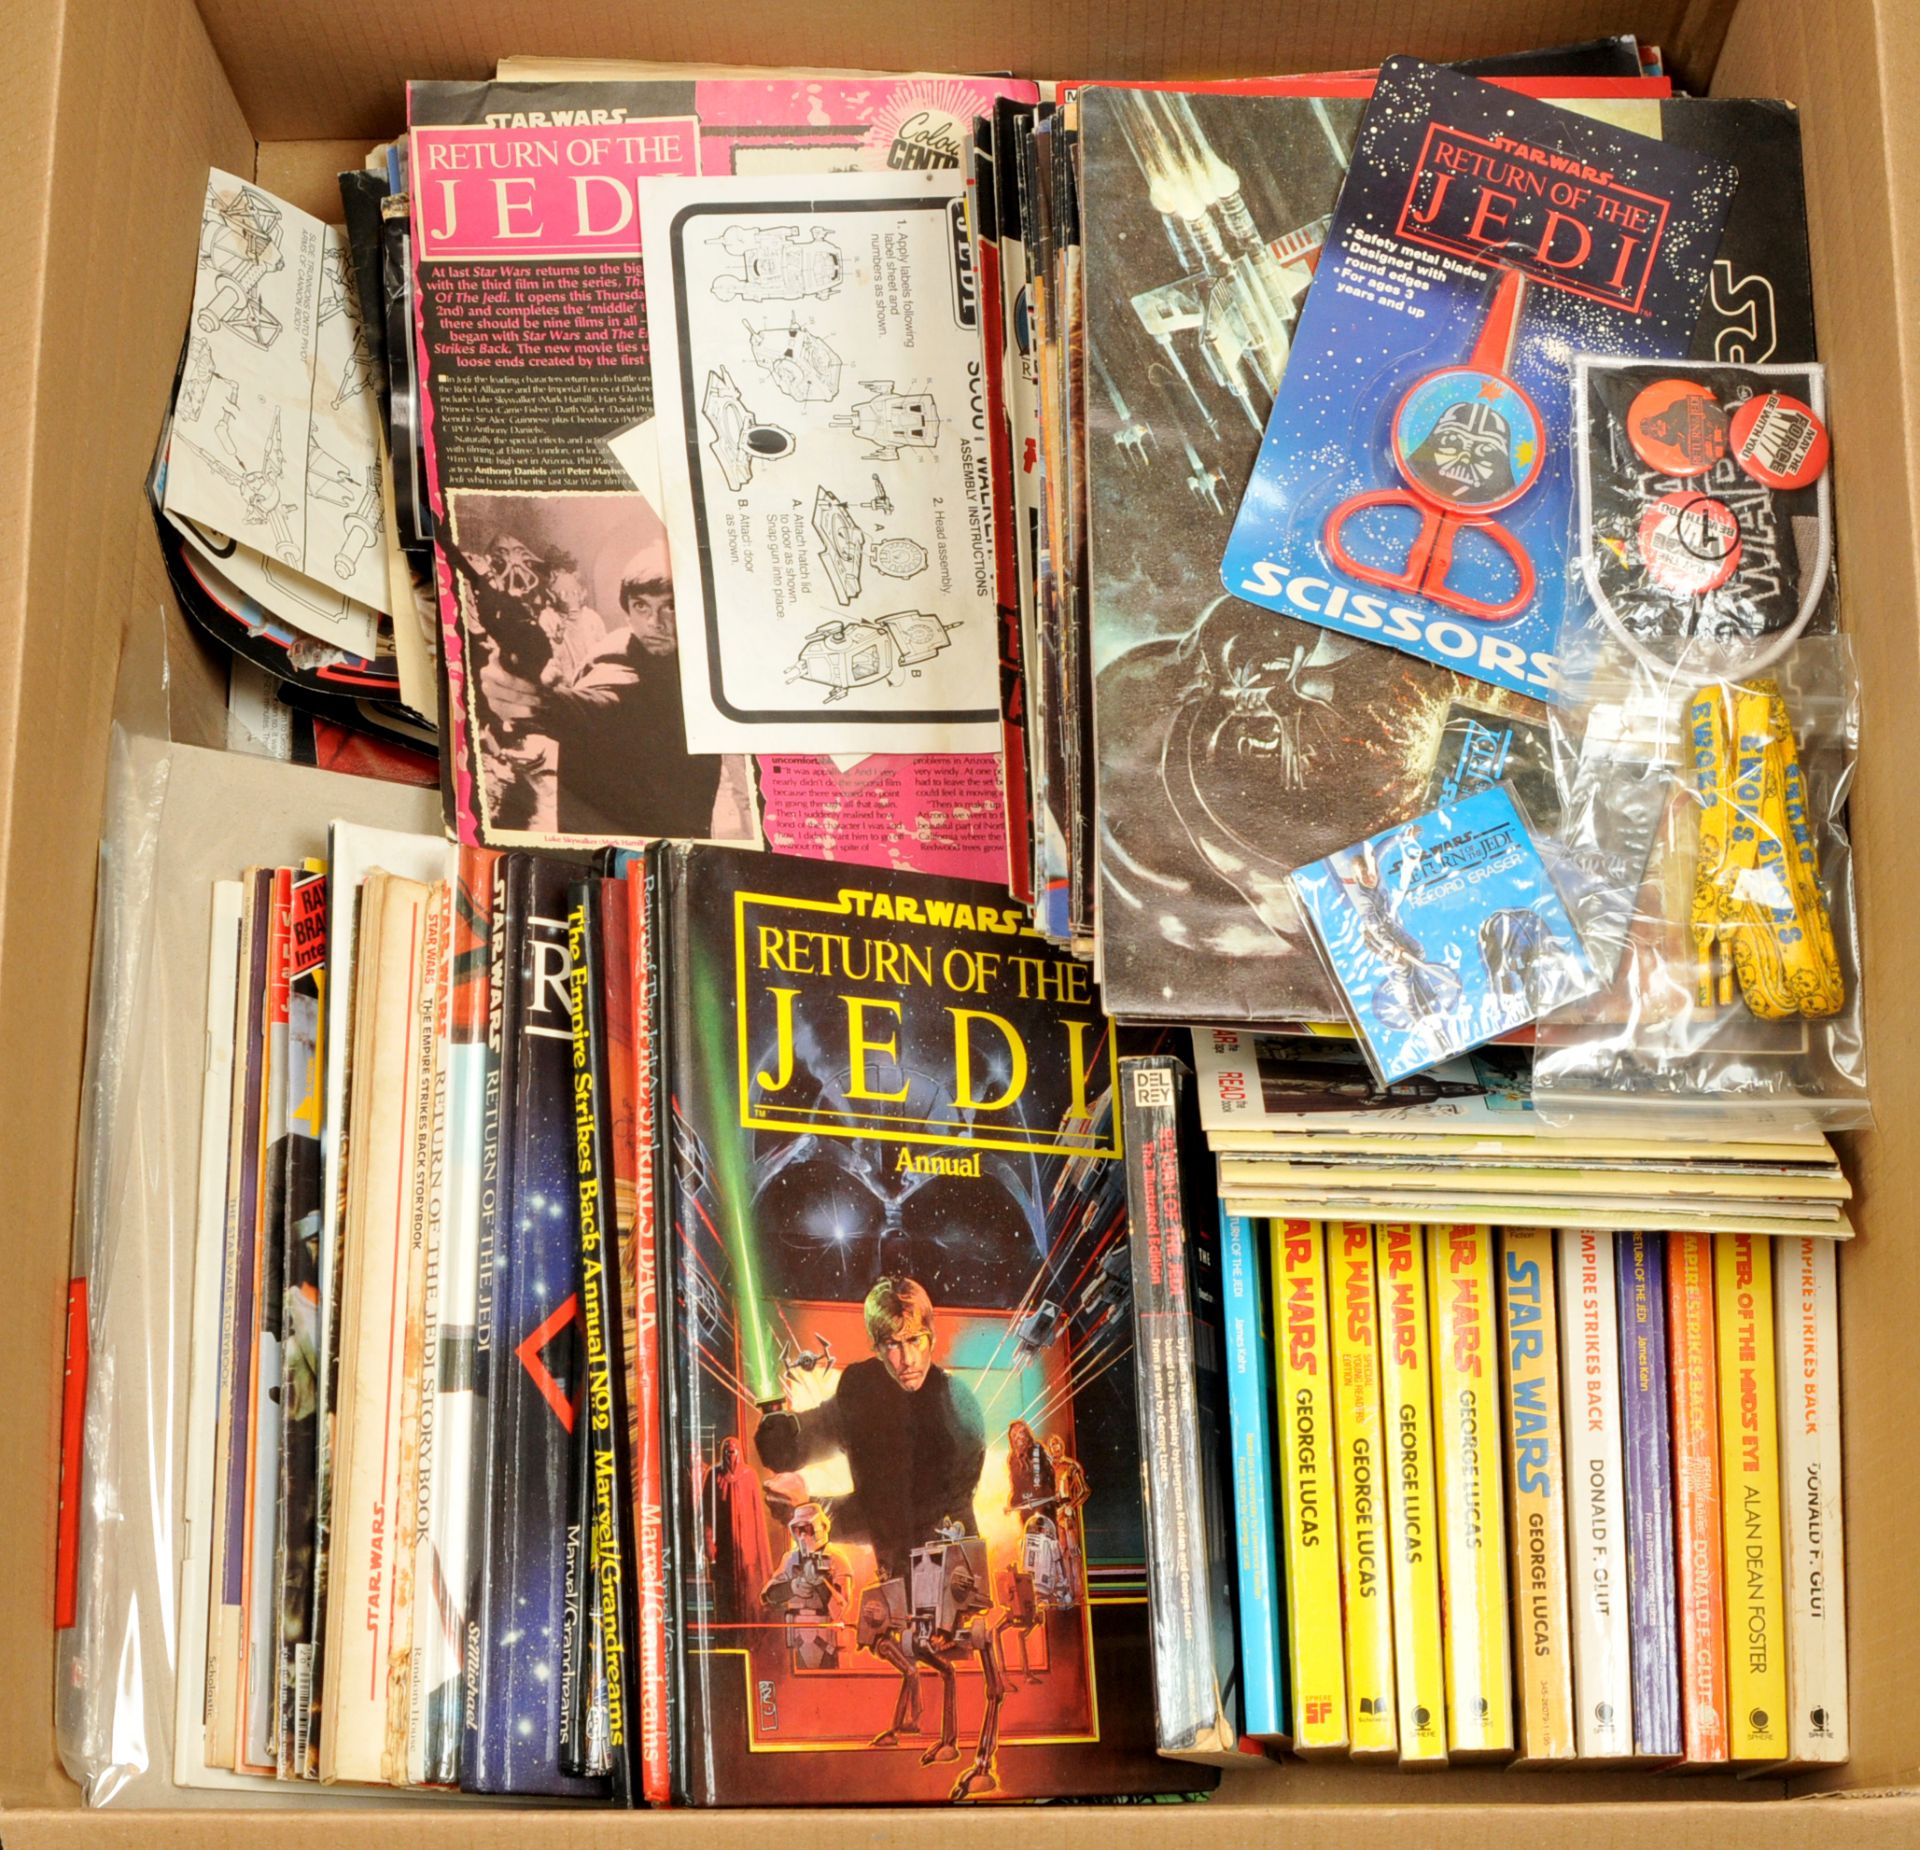 Star Wars vintage comics, books and other ephemera